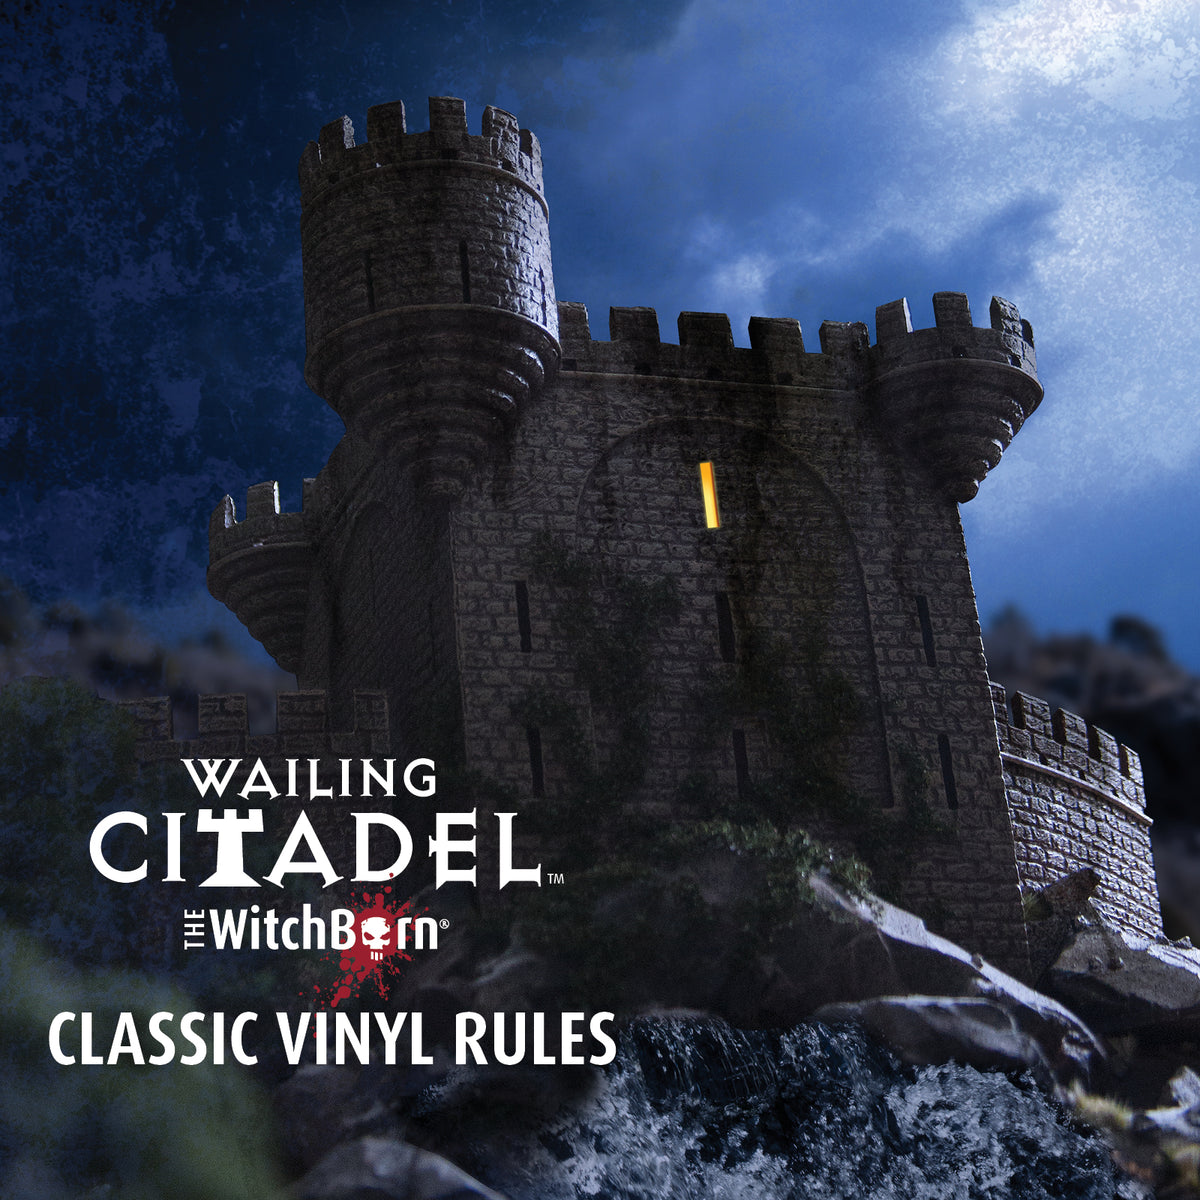 Wailing Citadel™ Classic PDF Guide